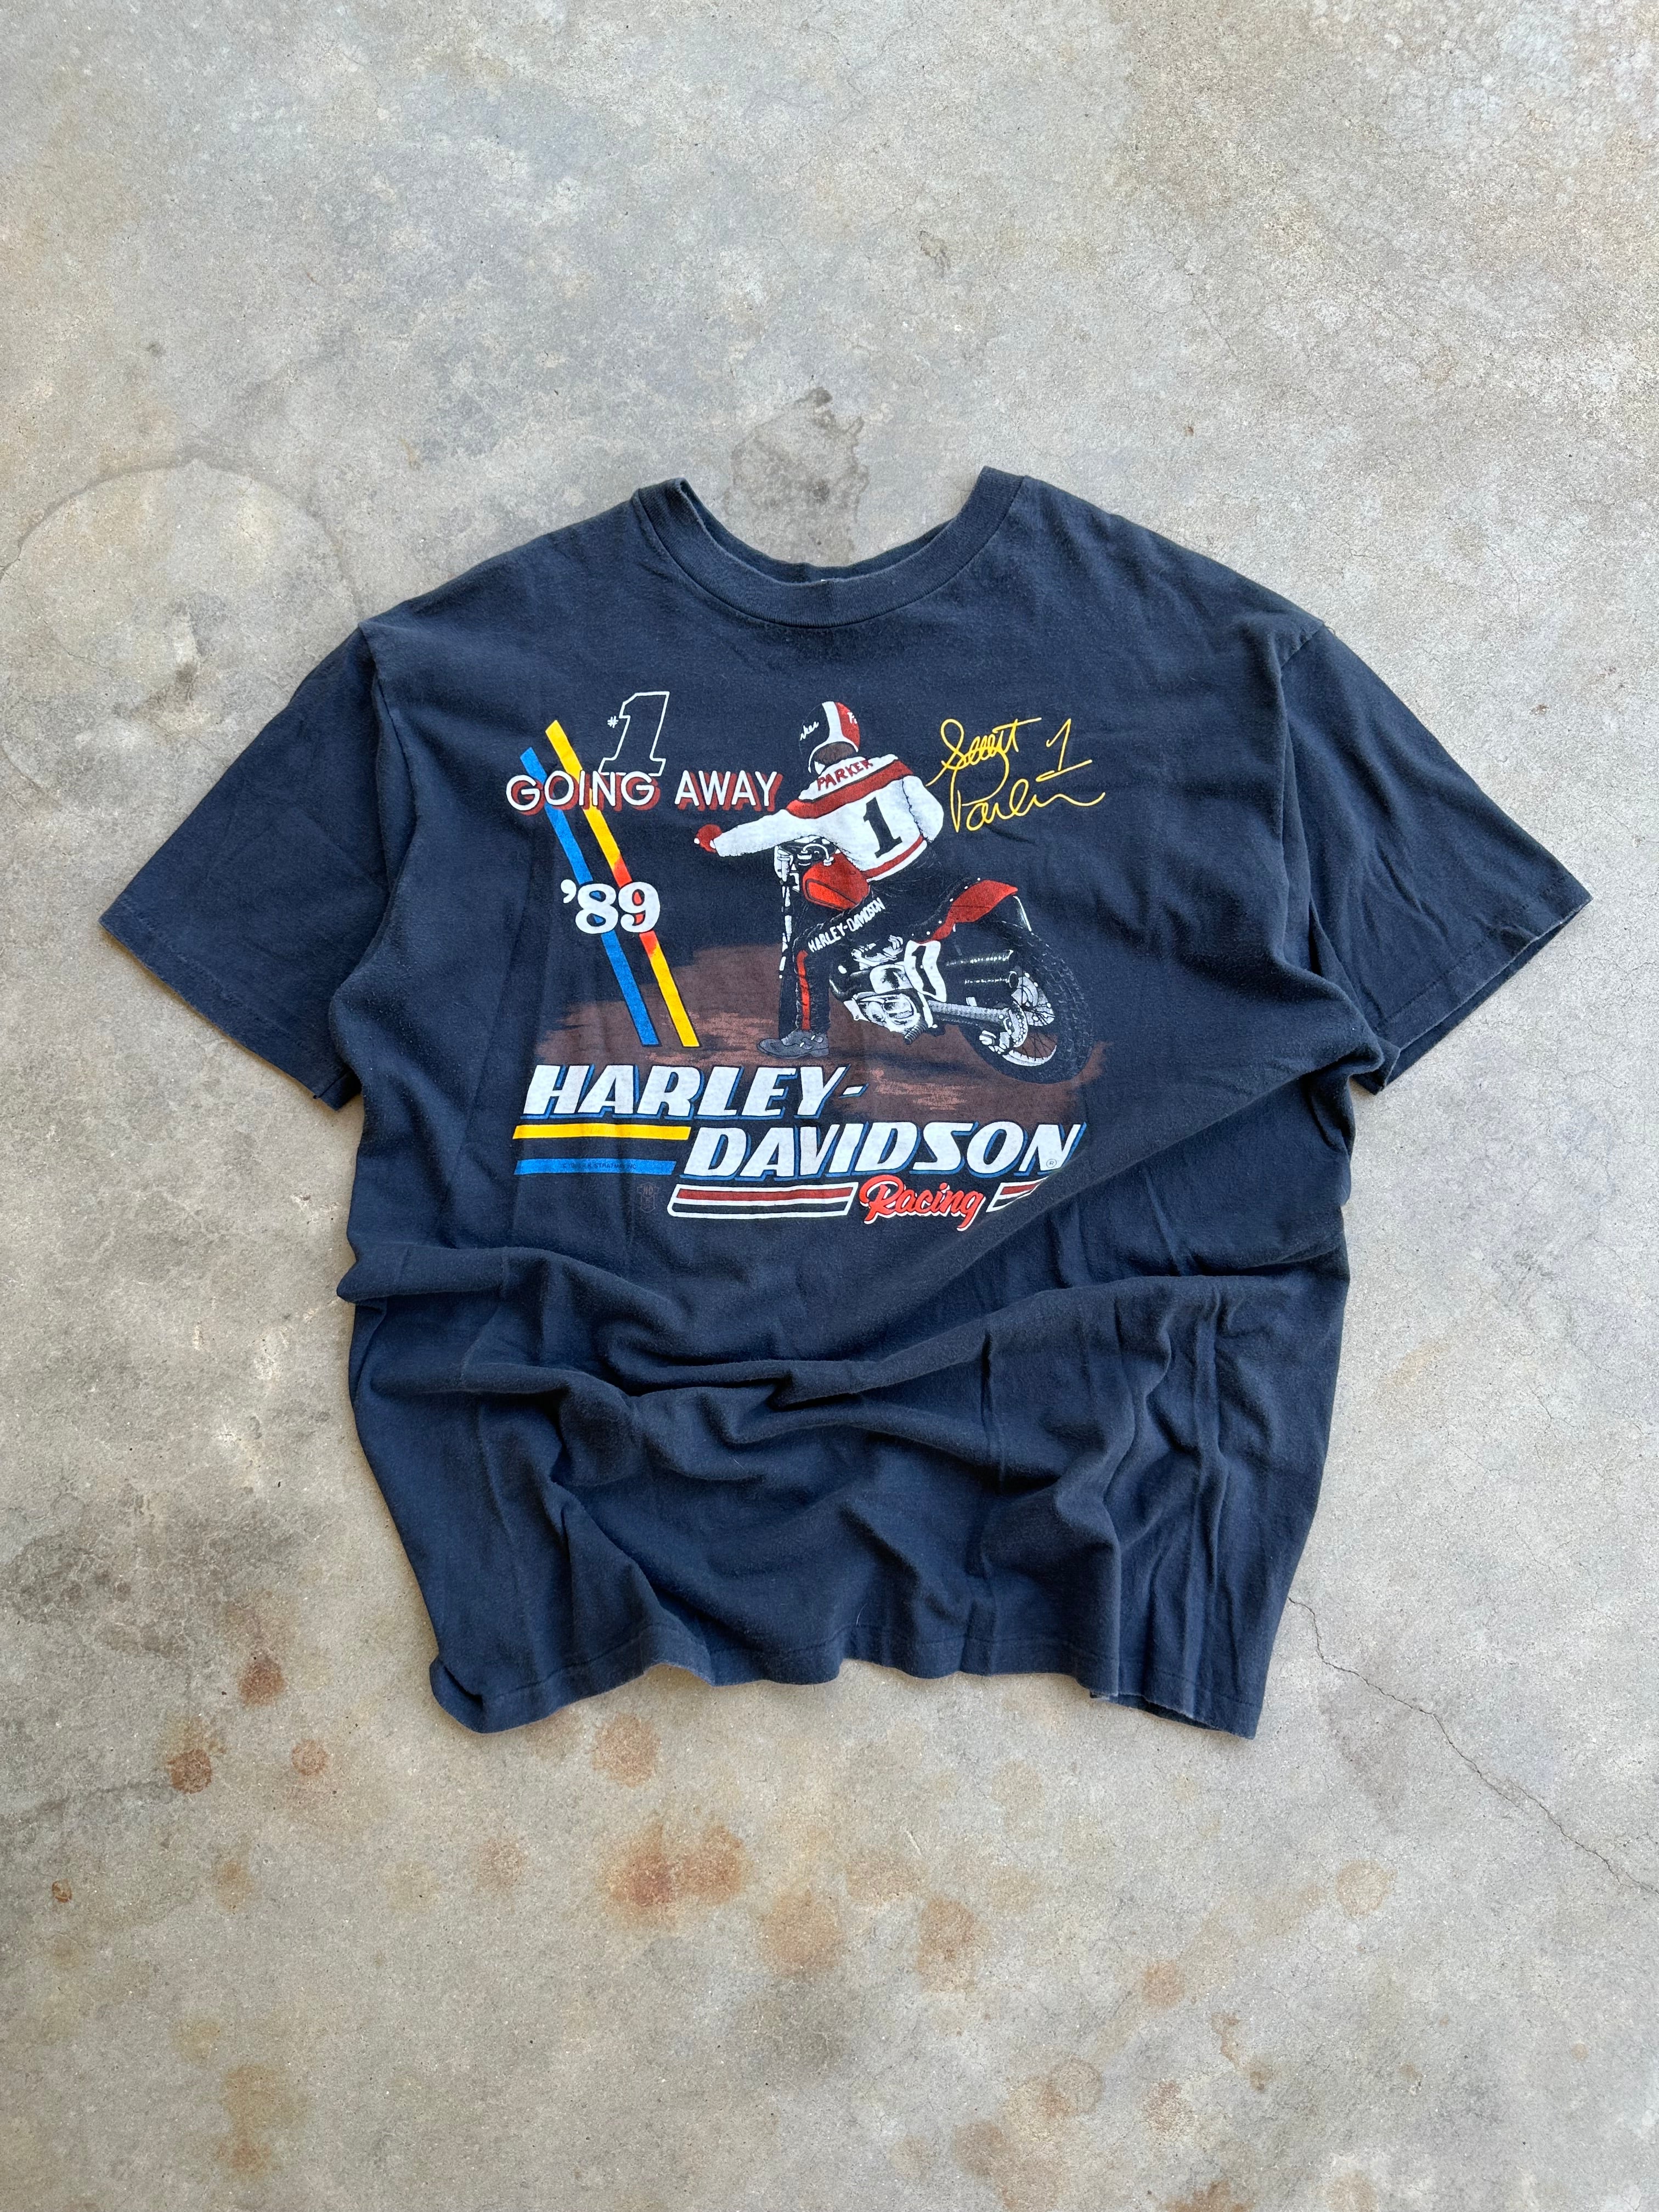 1989 Harley Davidson Racing T-Shirt (XL)